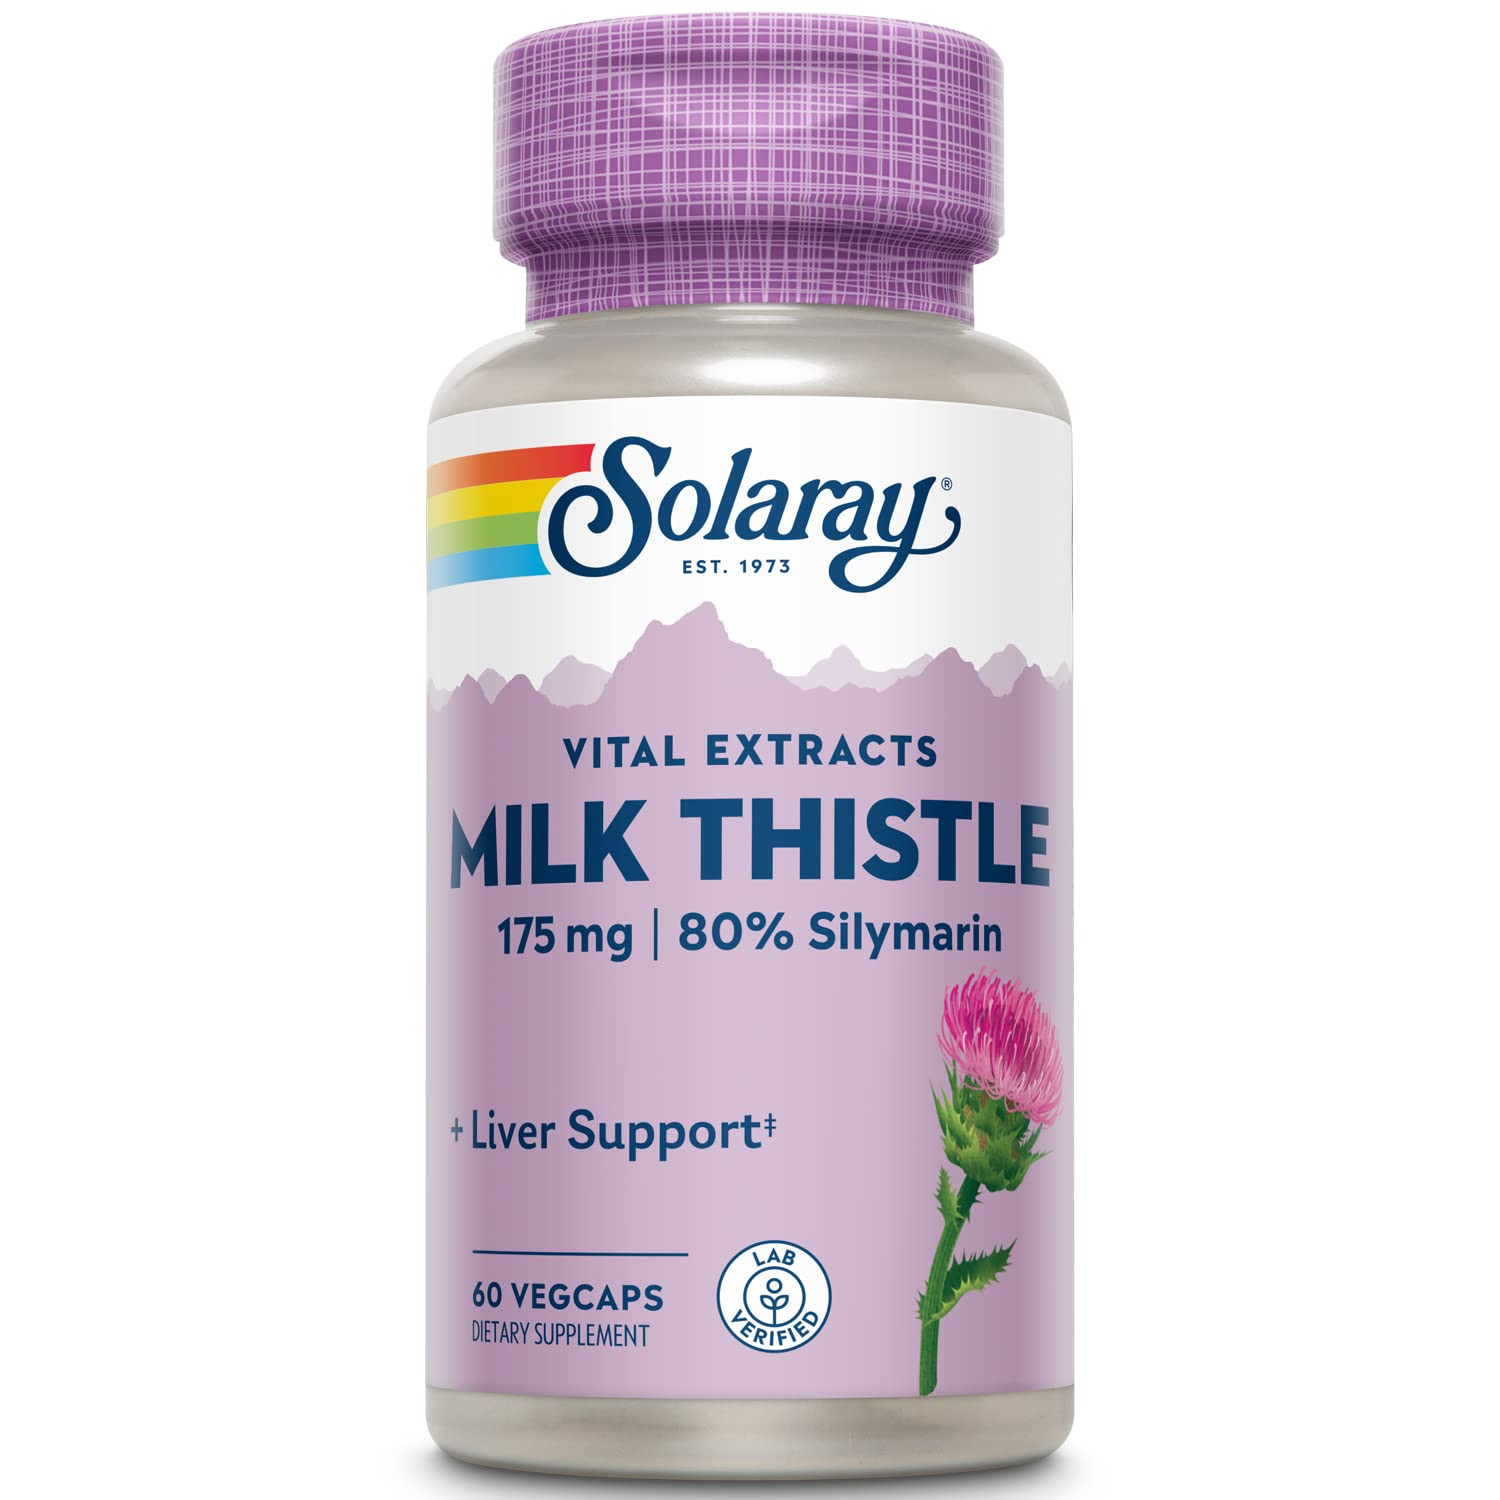 Solaray Milk Thistle 175mg 80% Silymarin 60 900mg 60vegcap